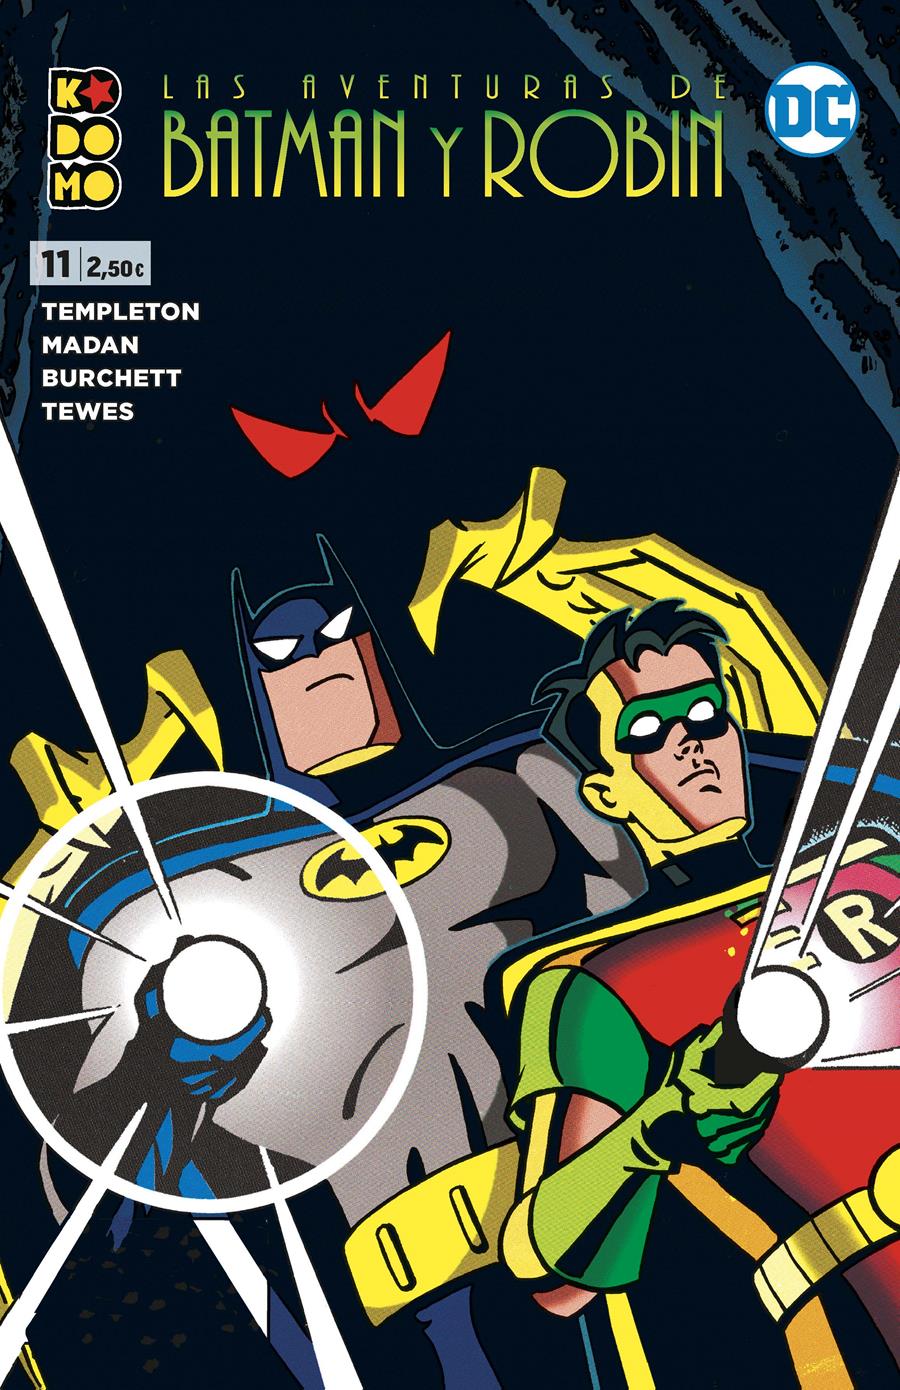 Las aventuras de Batman y Robin núm. 11 | N0123-ECC42 | Dev Madan / Rick Burchett / Ty Templeton | Terra de Còmic - Tu tienda de cómics online especializada en cómics, manga y merchandising